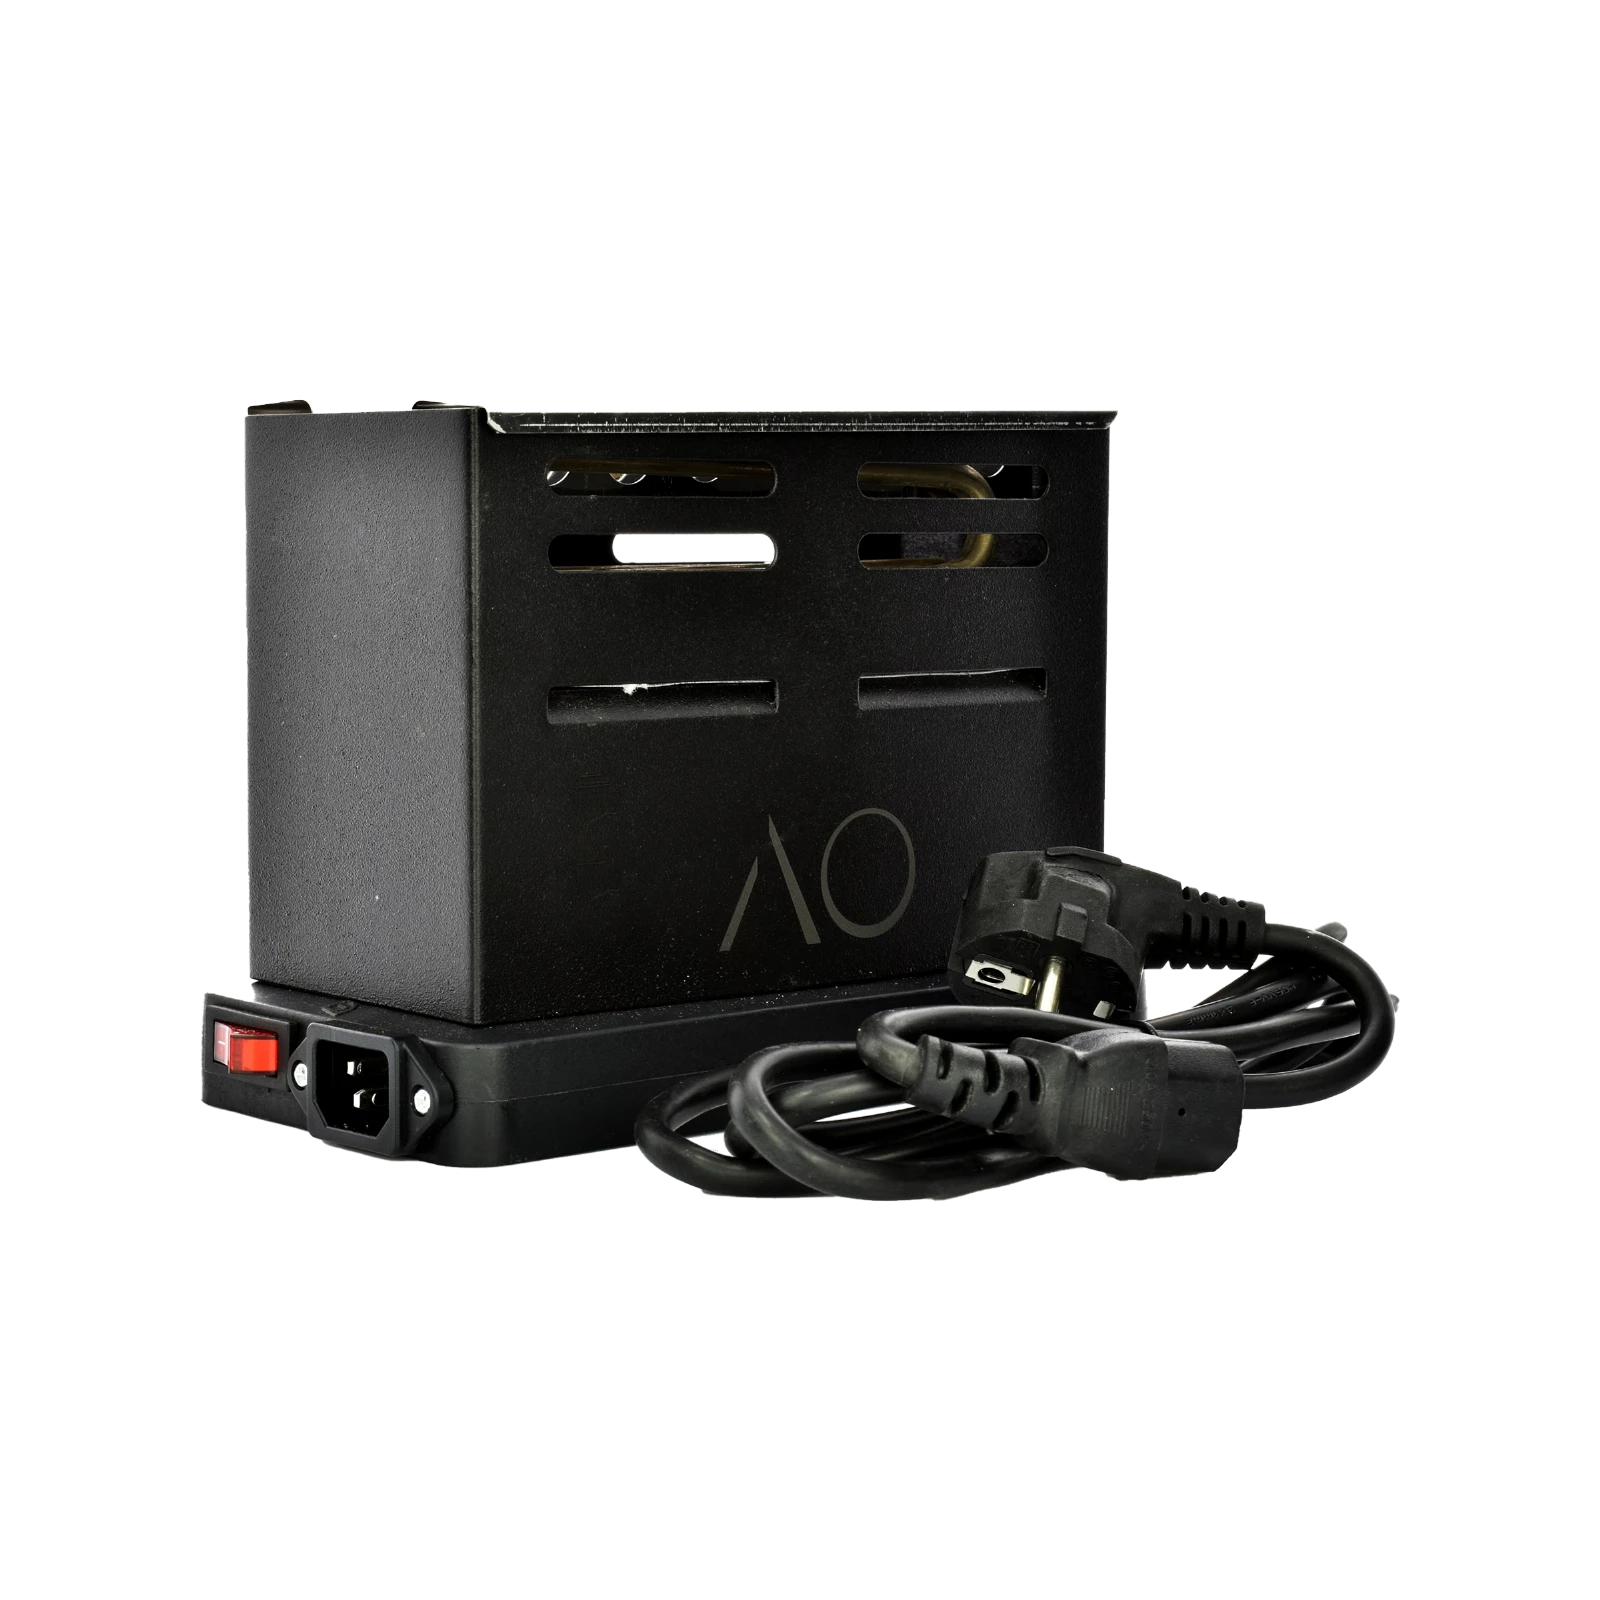 AO - Blazer V - Kohleanzünder - 800W | günstig online kaufen2